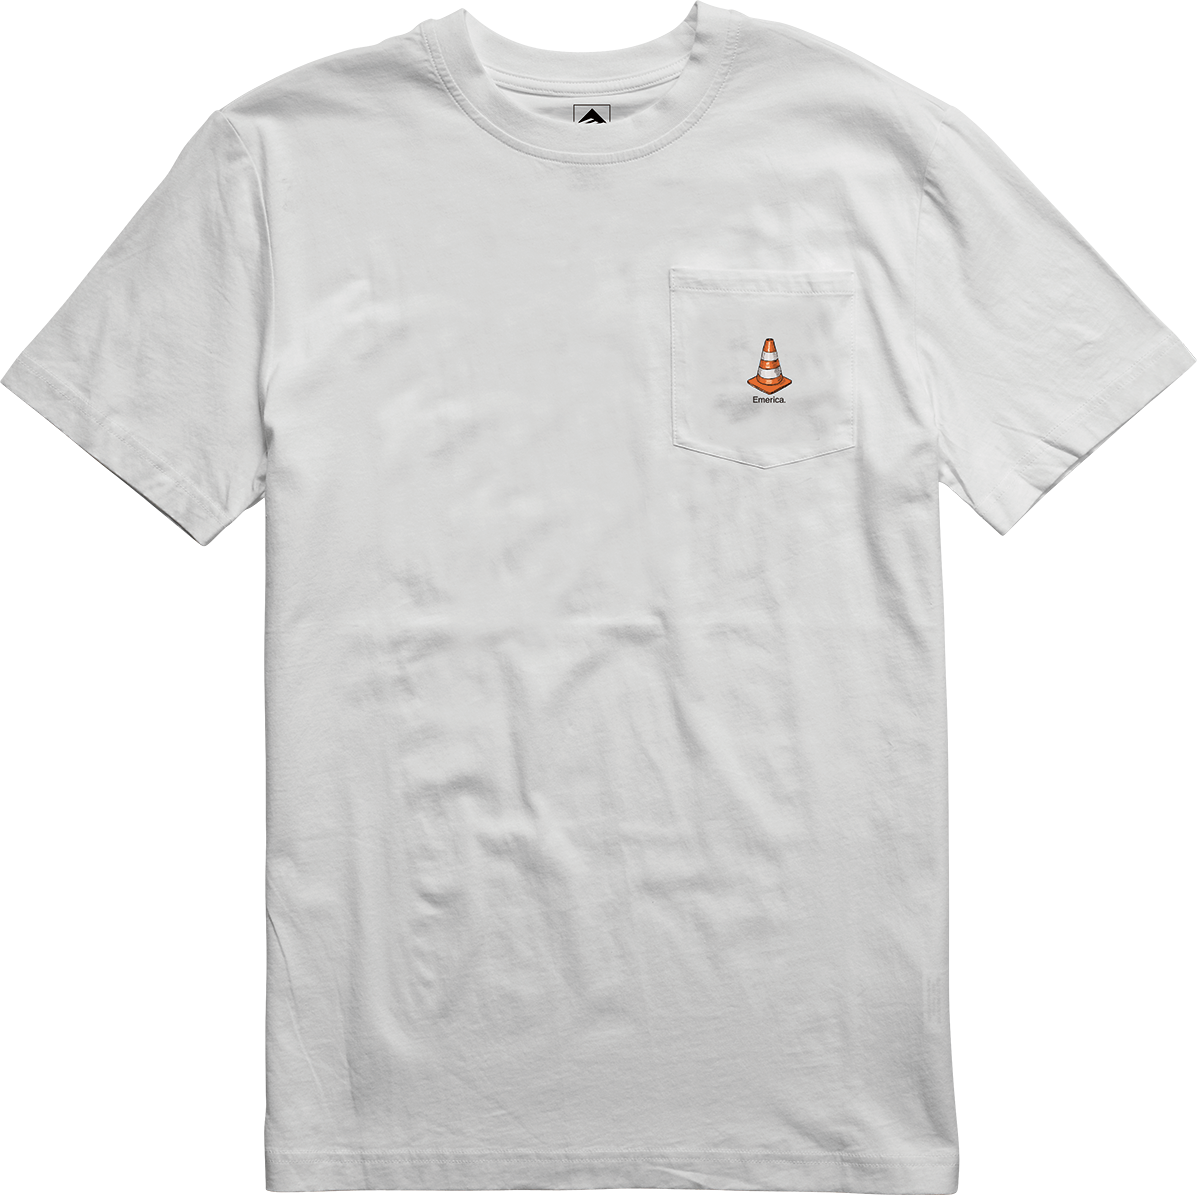 Emerica Mens Streets Pocket Tee White T-Shirt